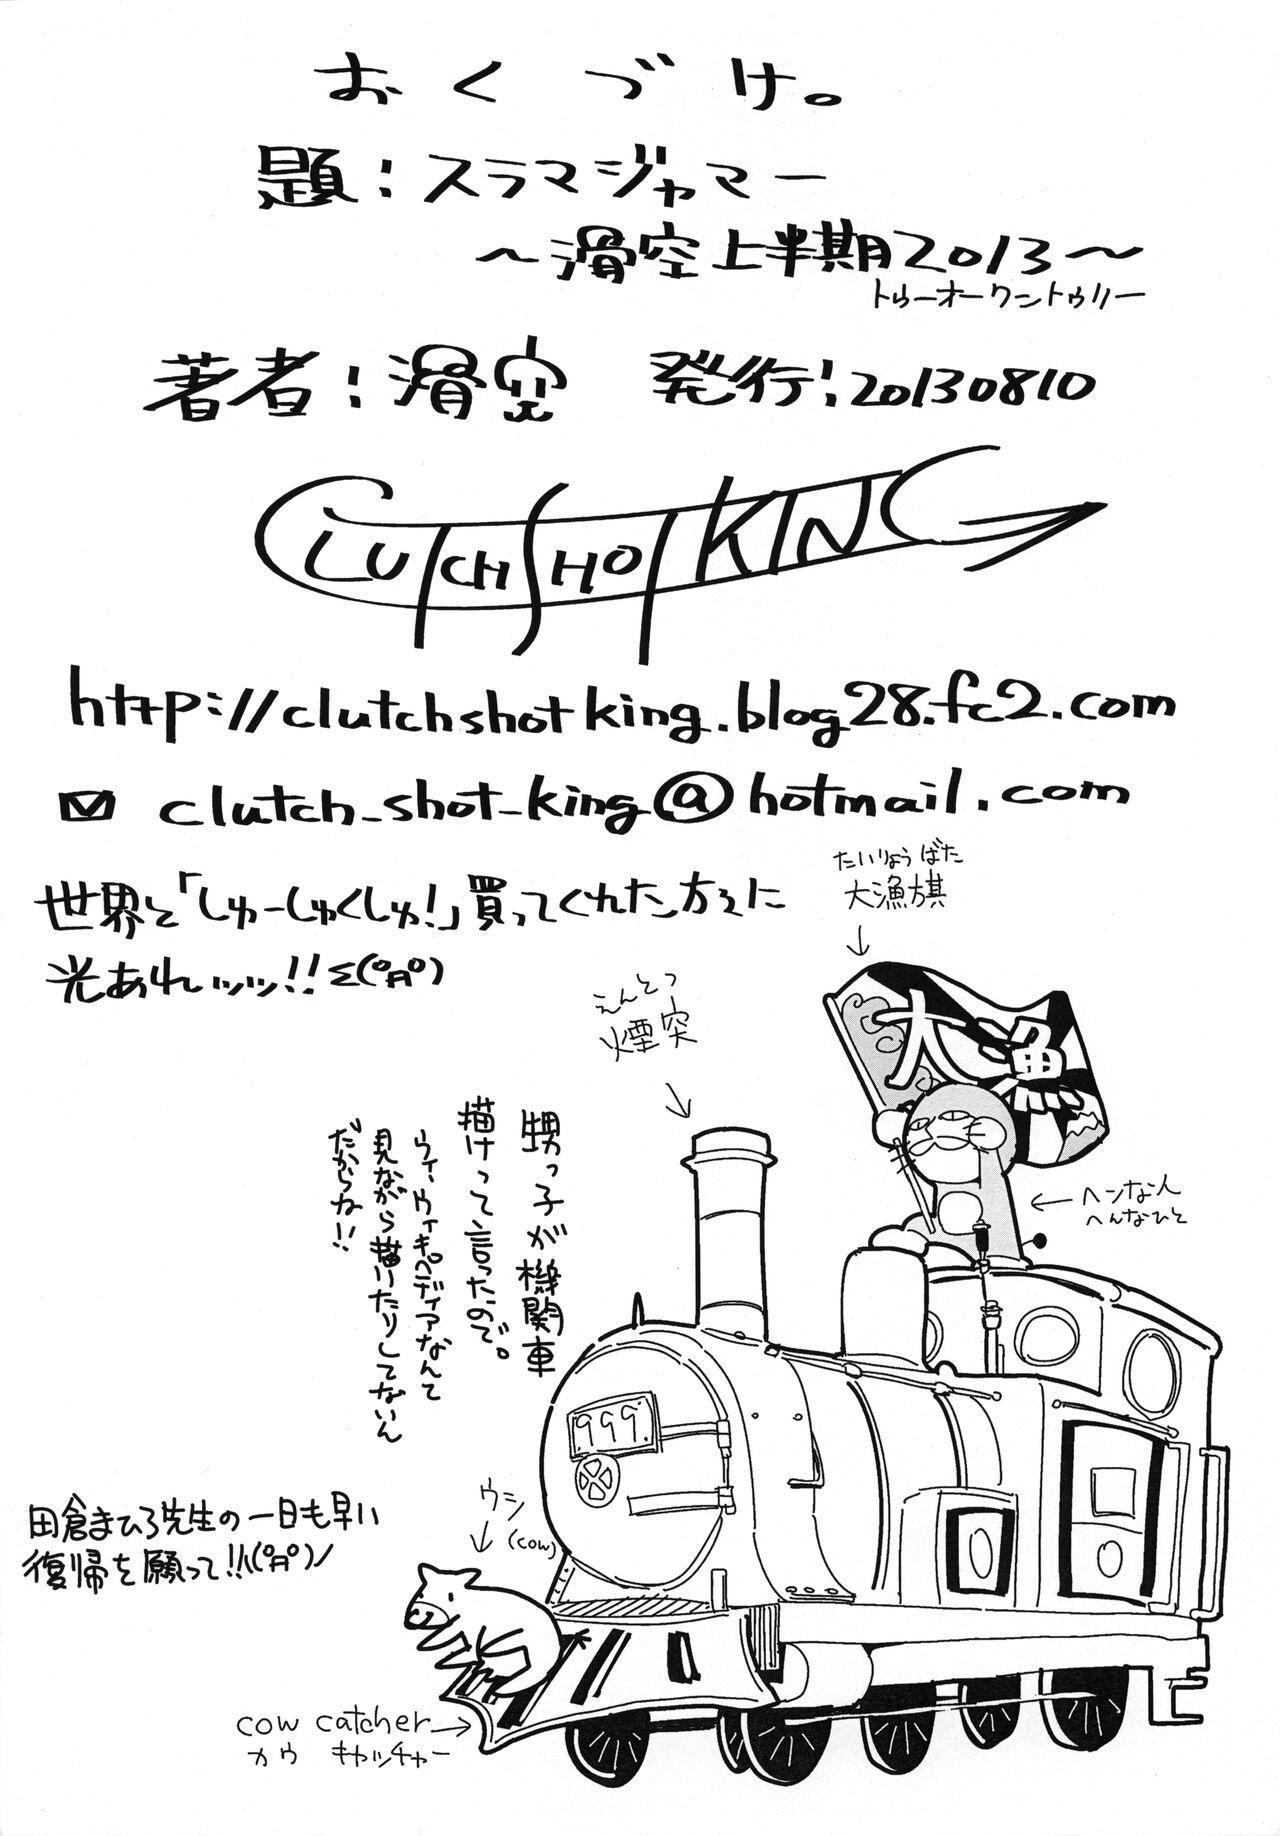 Swallowing Slammer Jammer Kakkuu Kamihanki 2013 - Dokidoki precure Tamako market Wreck it ralph Skinny - Page 9